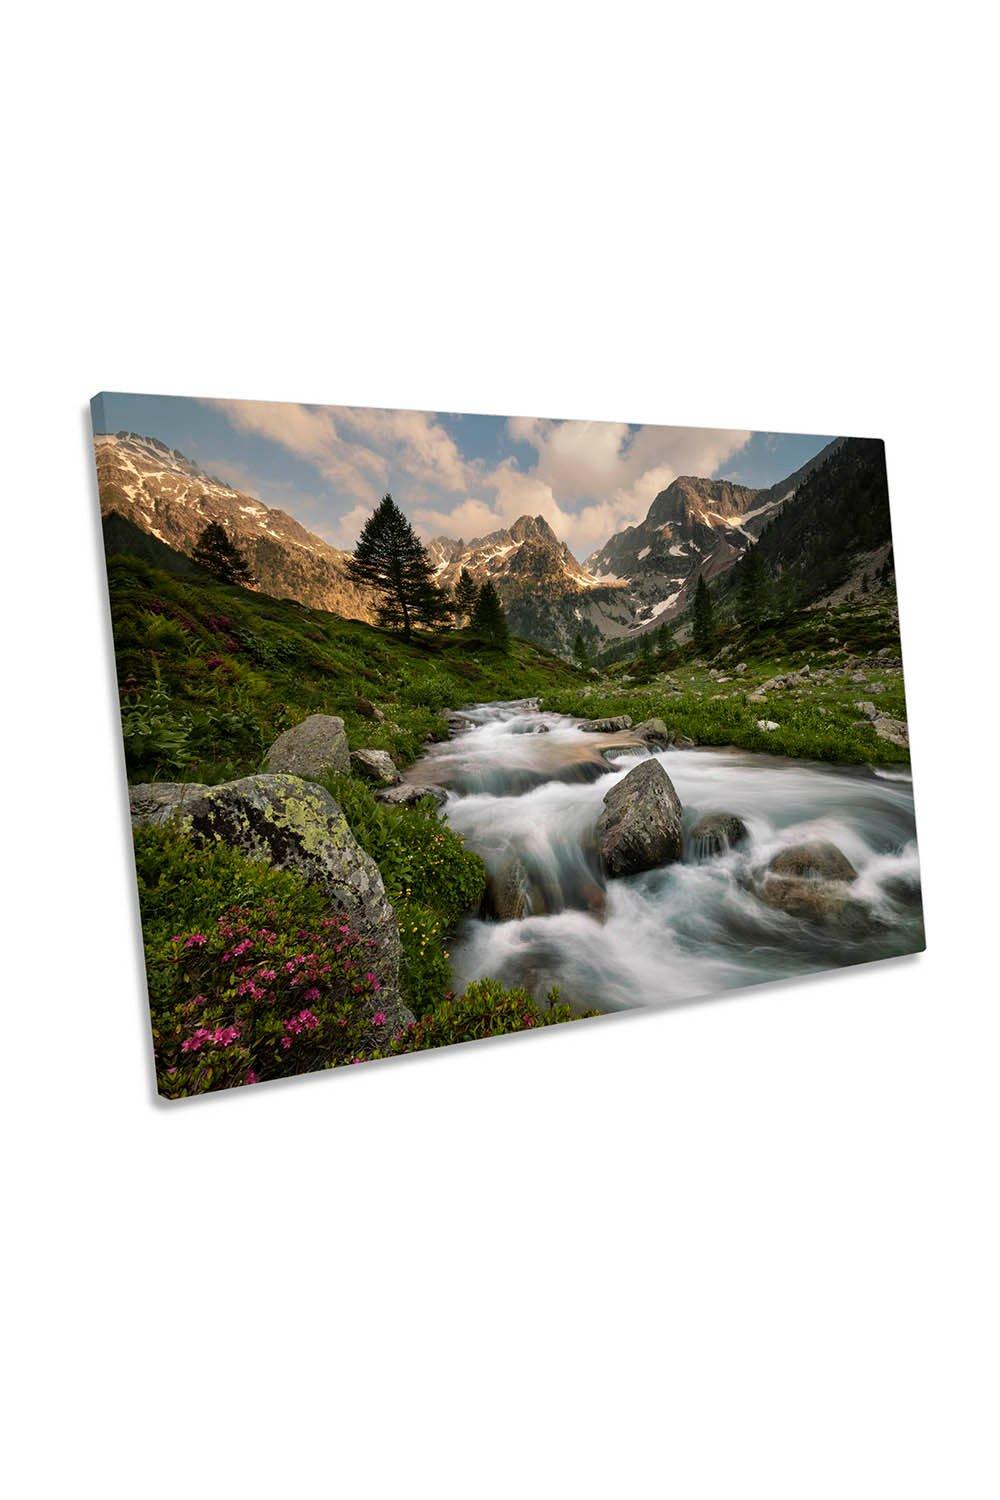 Martime Alps Park Mountains River Canvas Wall Art Picture Print